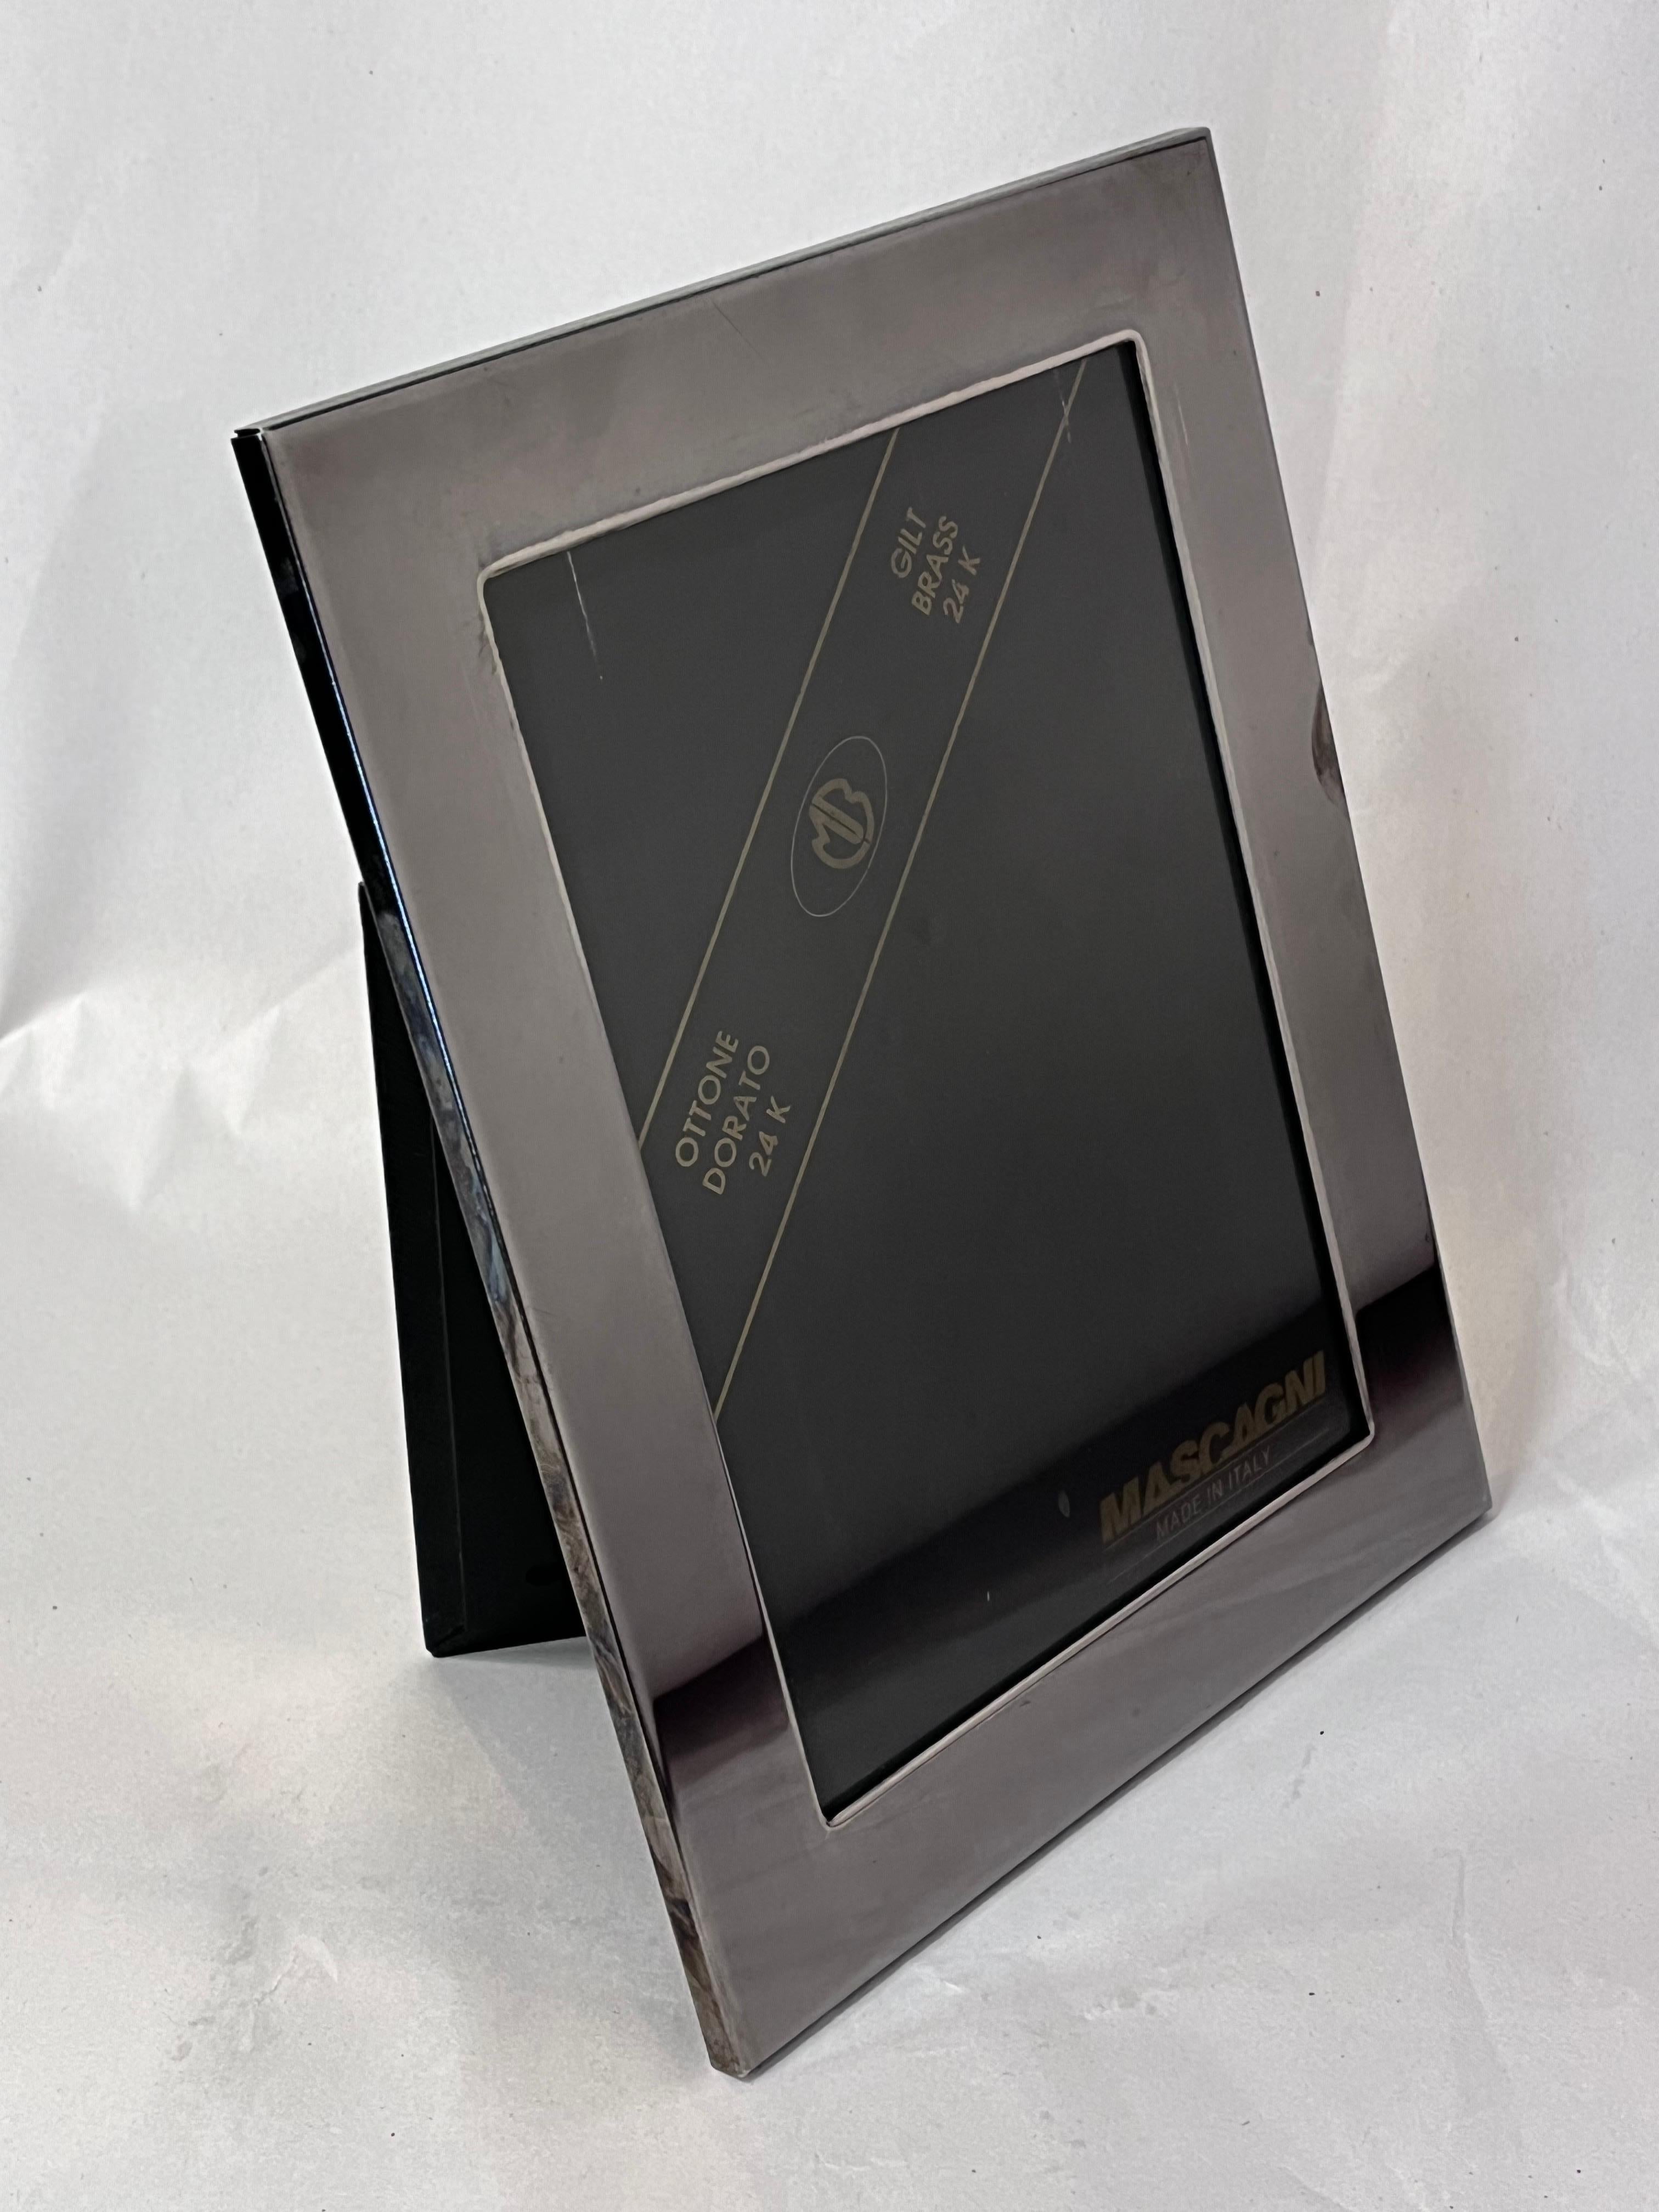 Metal Umberto Mascagni Designed Italian 20th Century Sleek Desk Accessory Photo Frame For Sale